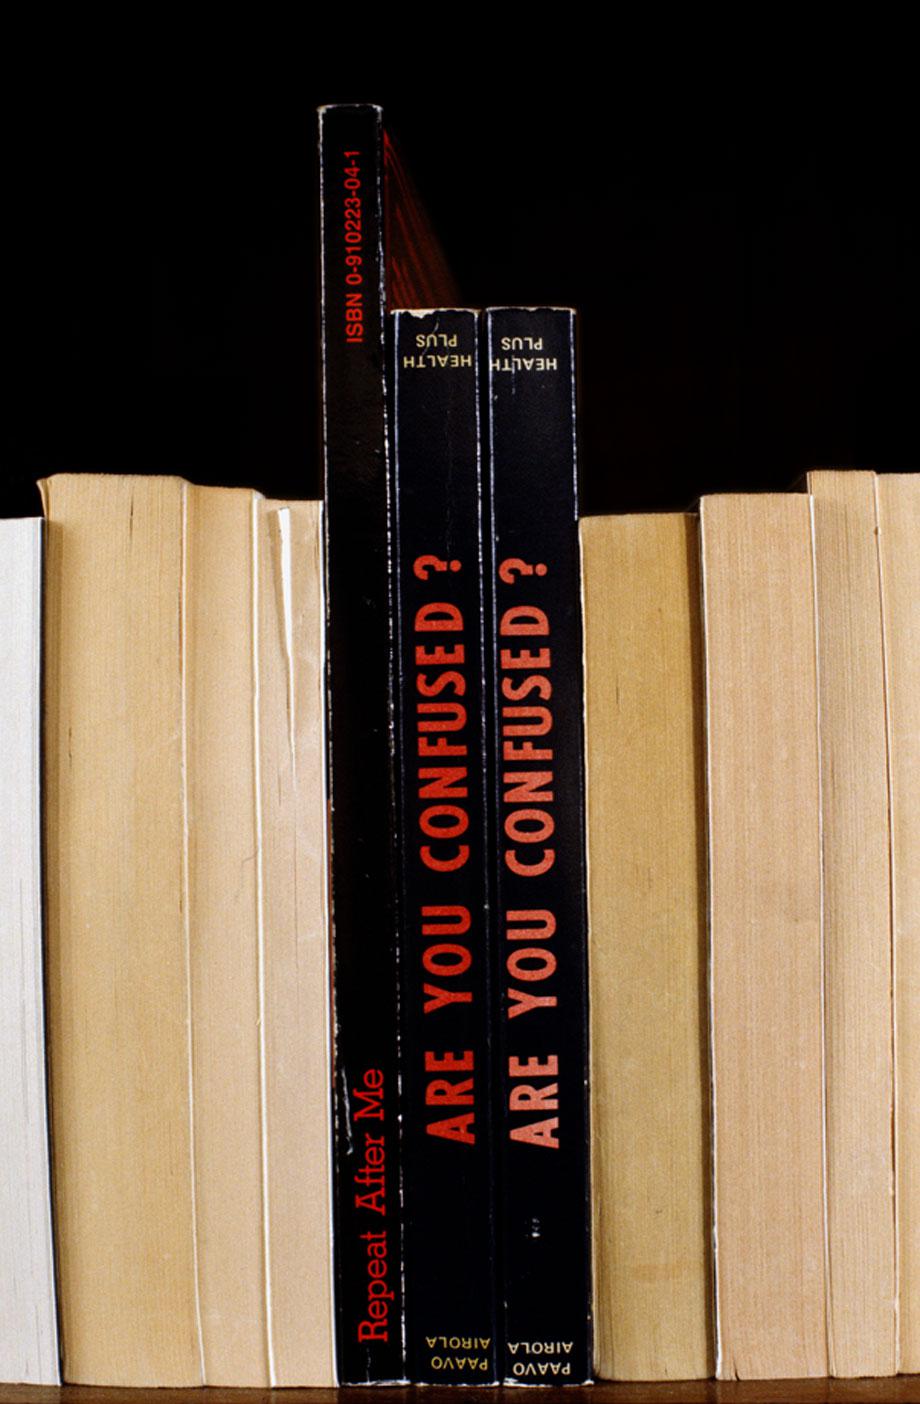 Nina Katchadourian's "Sorted Books"